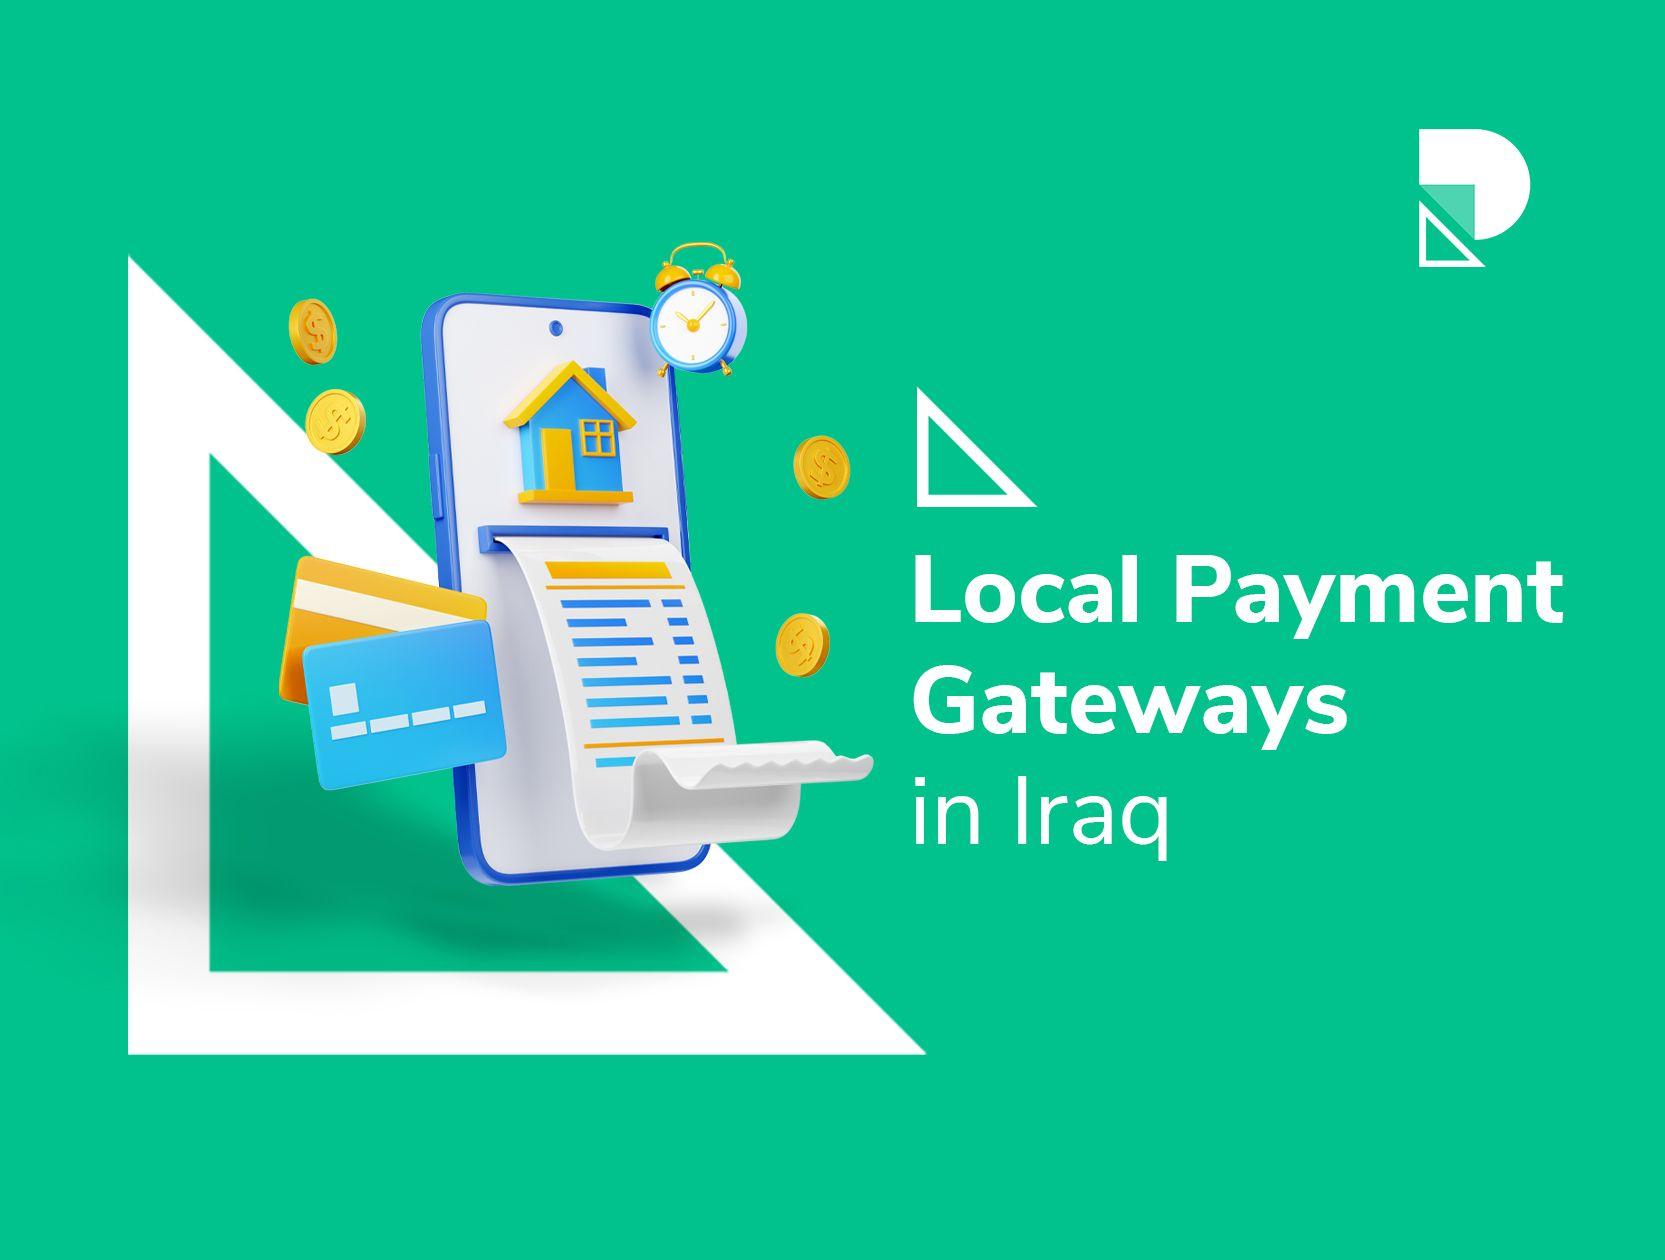 Local Payment Gateways in Iraq